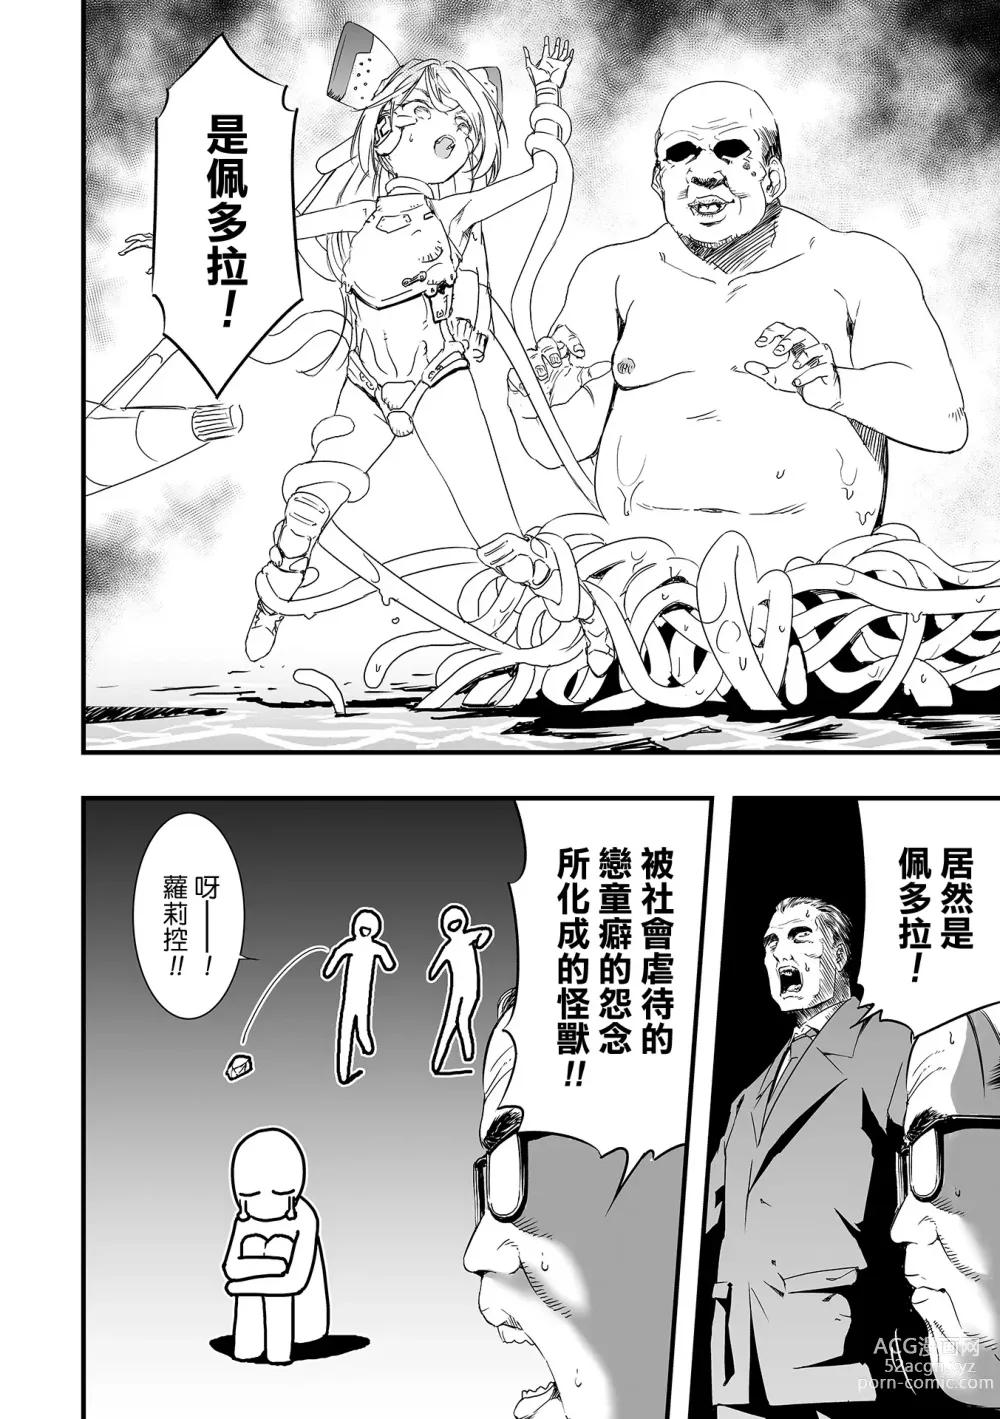 Page 9 of manga 硫那拉 vs 佩多拉